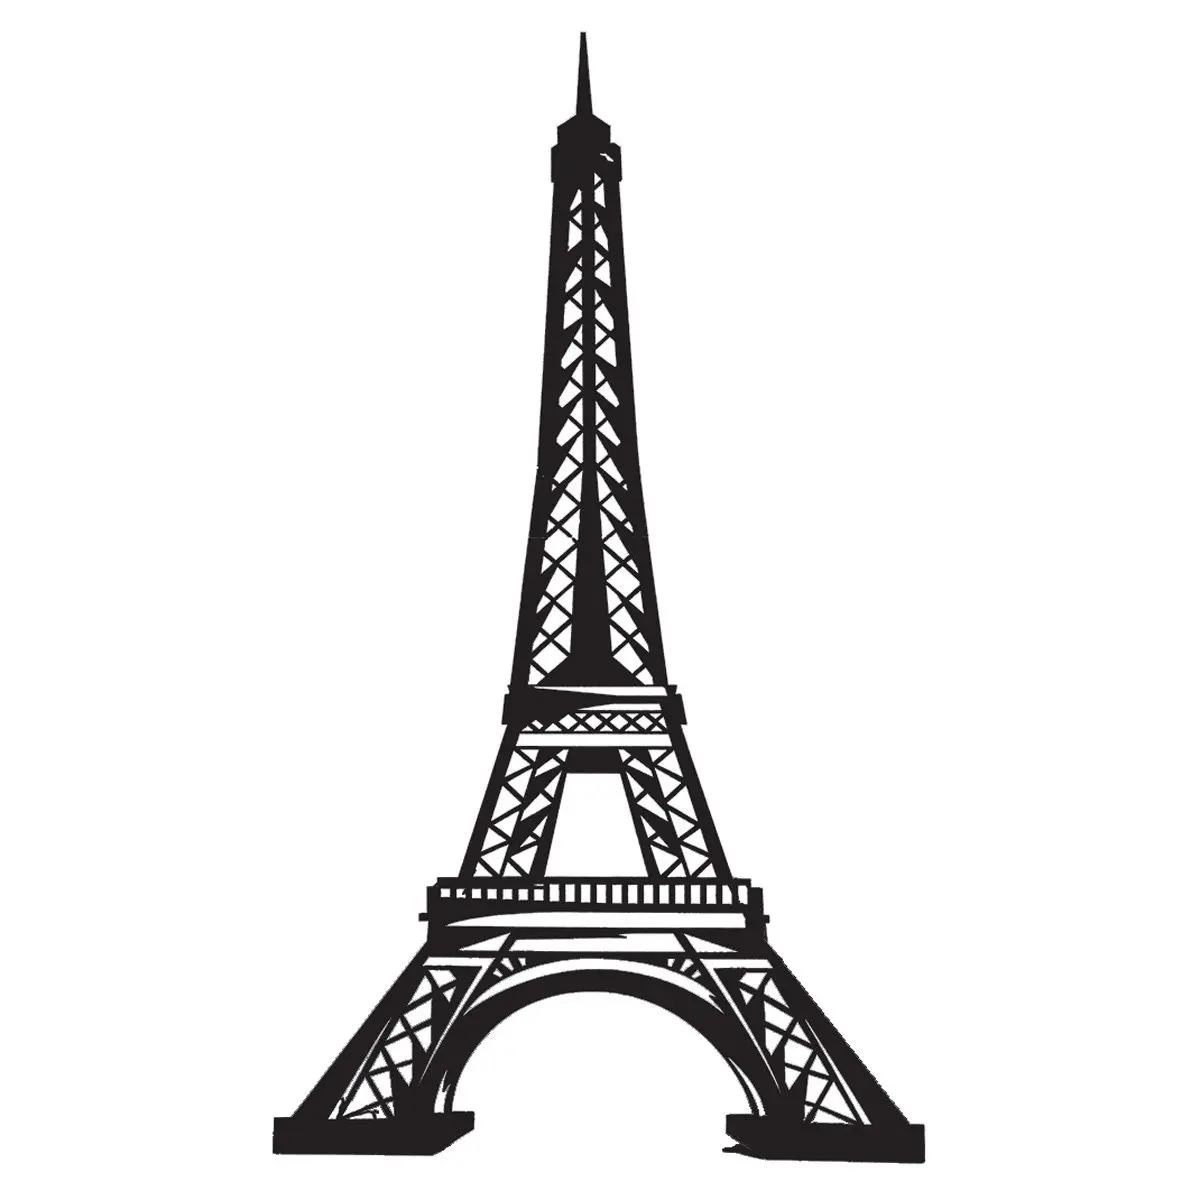 Cheap Eiffel Tower Black White, find Eiffel Tower Black White deals on